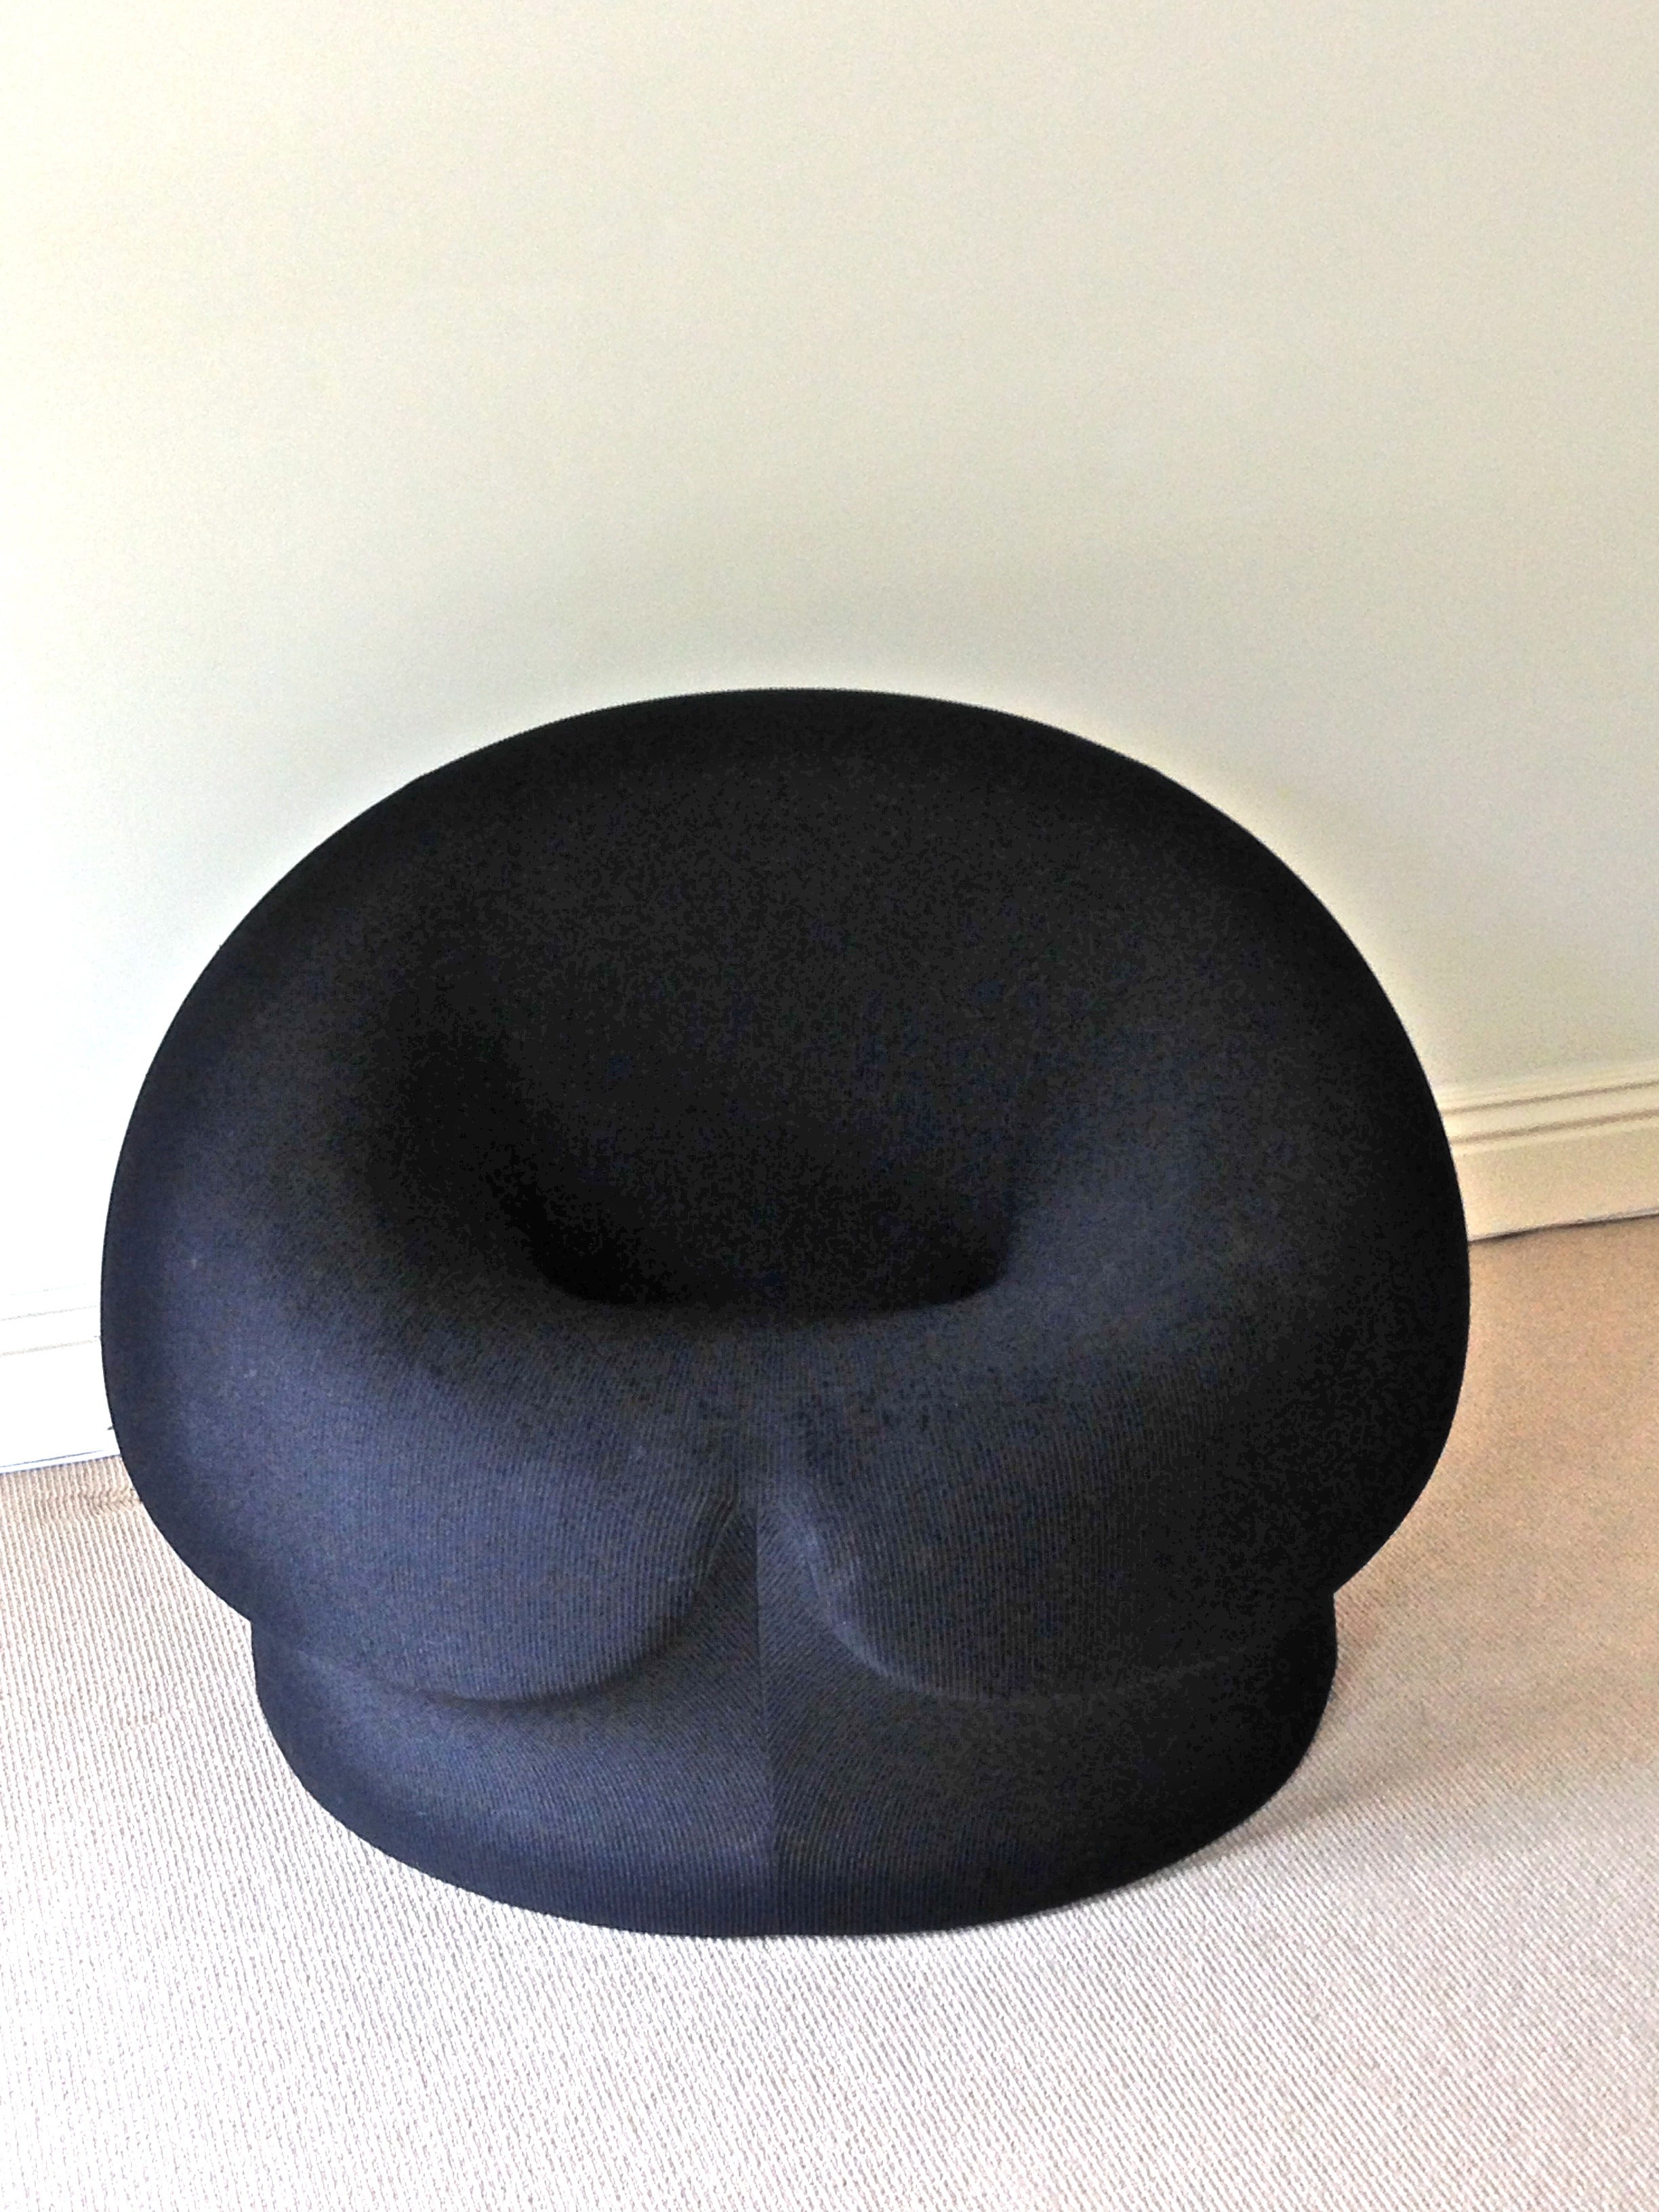 Gaetano Pesce Chair in Black Up3